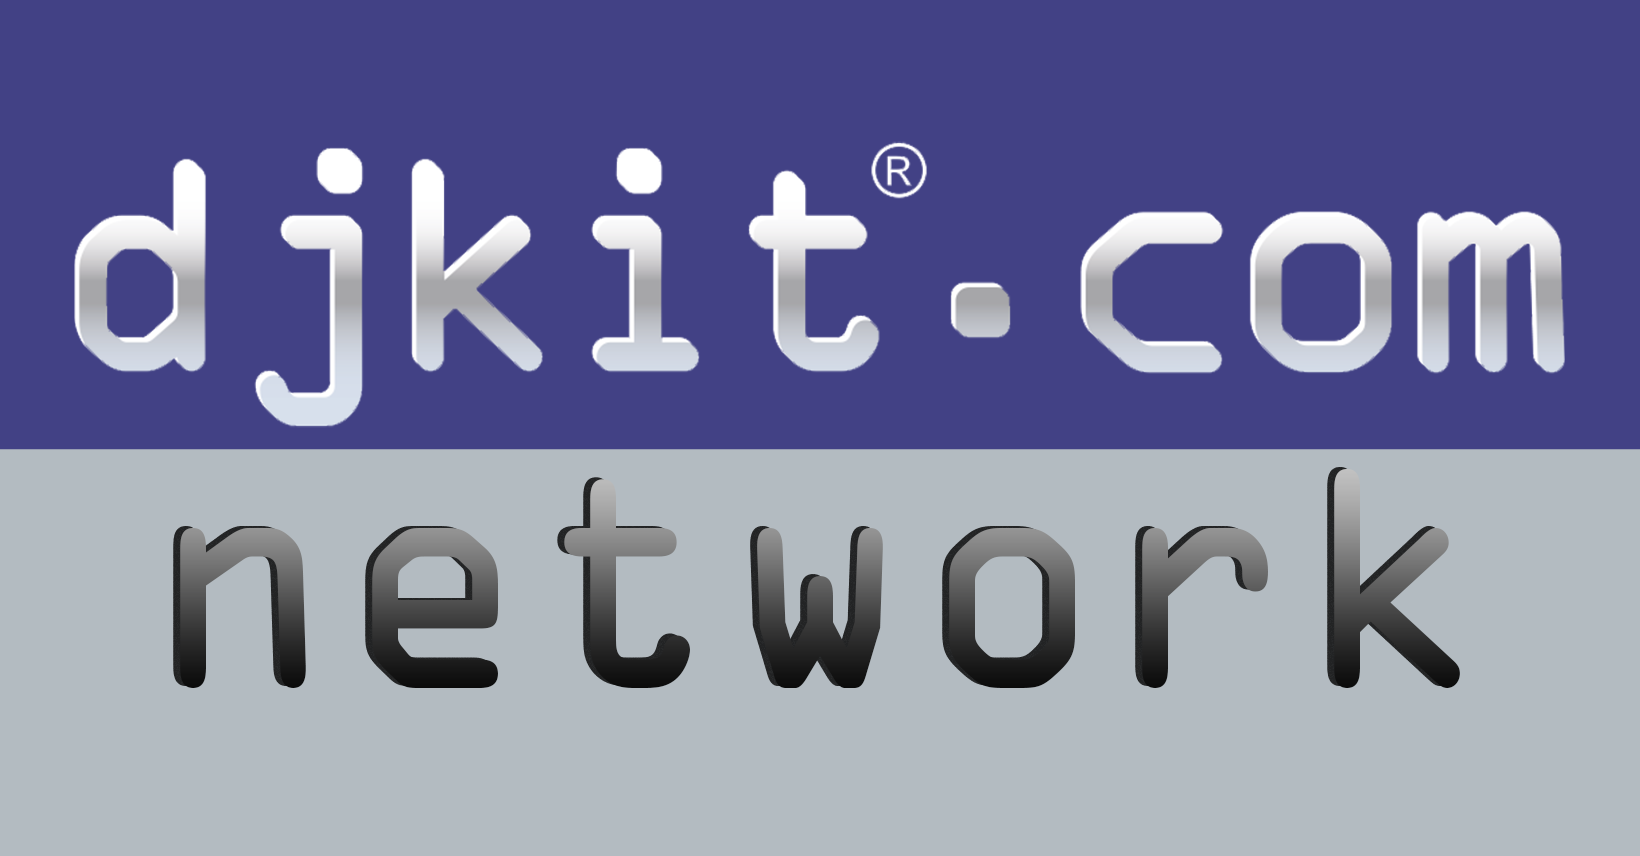 The DJKit Network